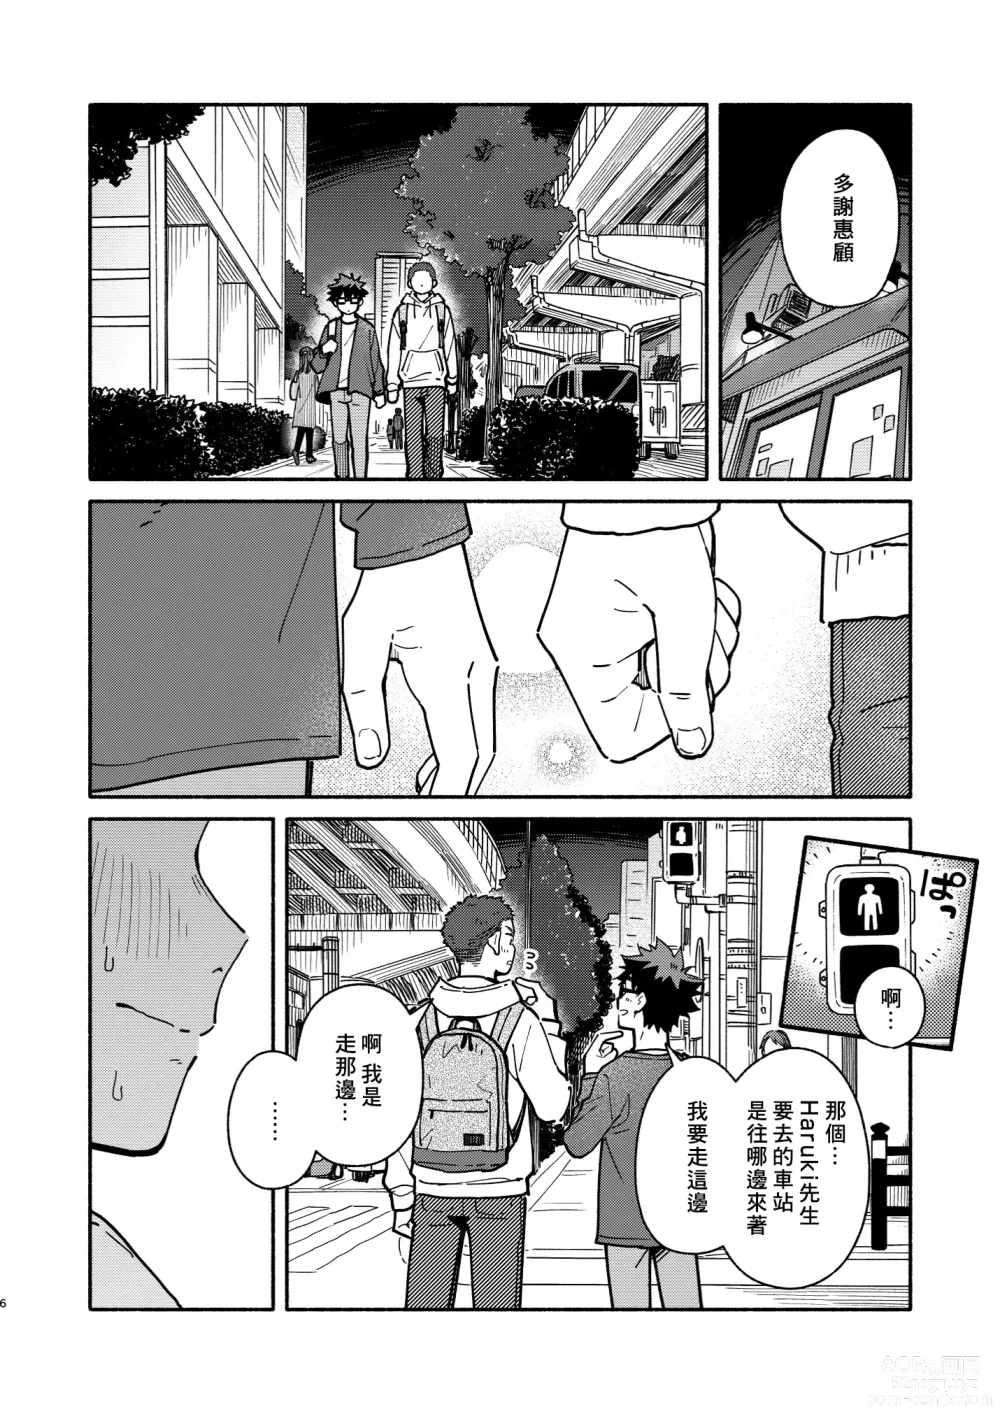 Page 5 of doujinshi 那就、下回見。